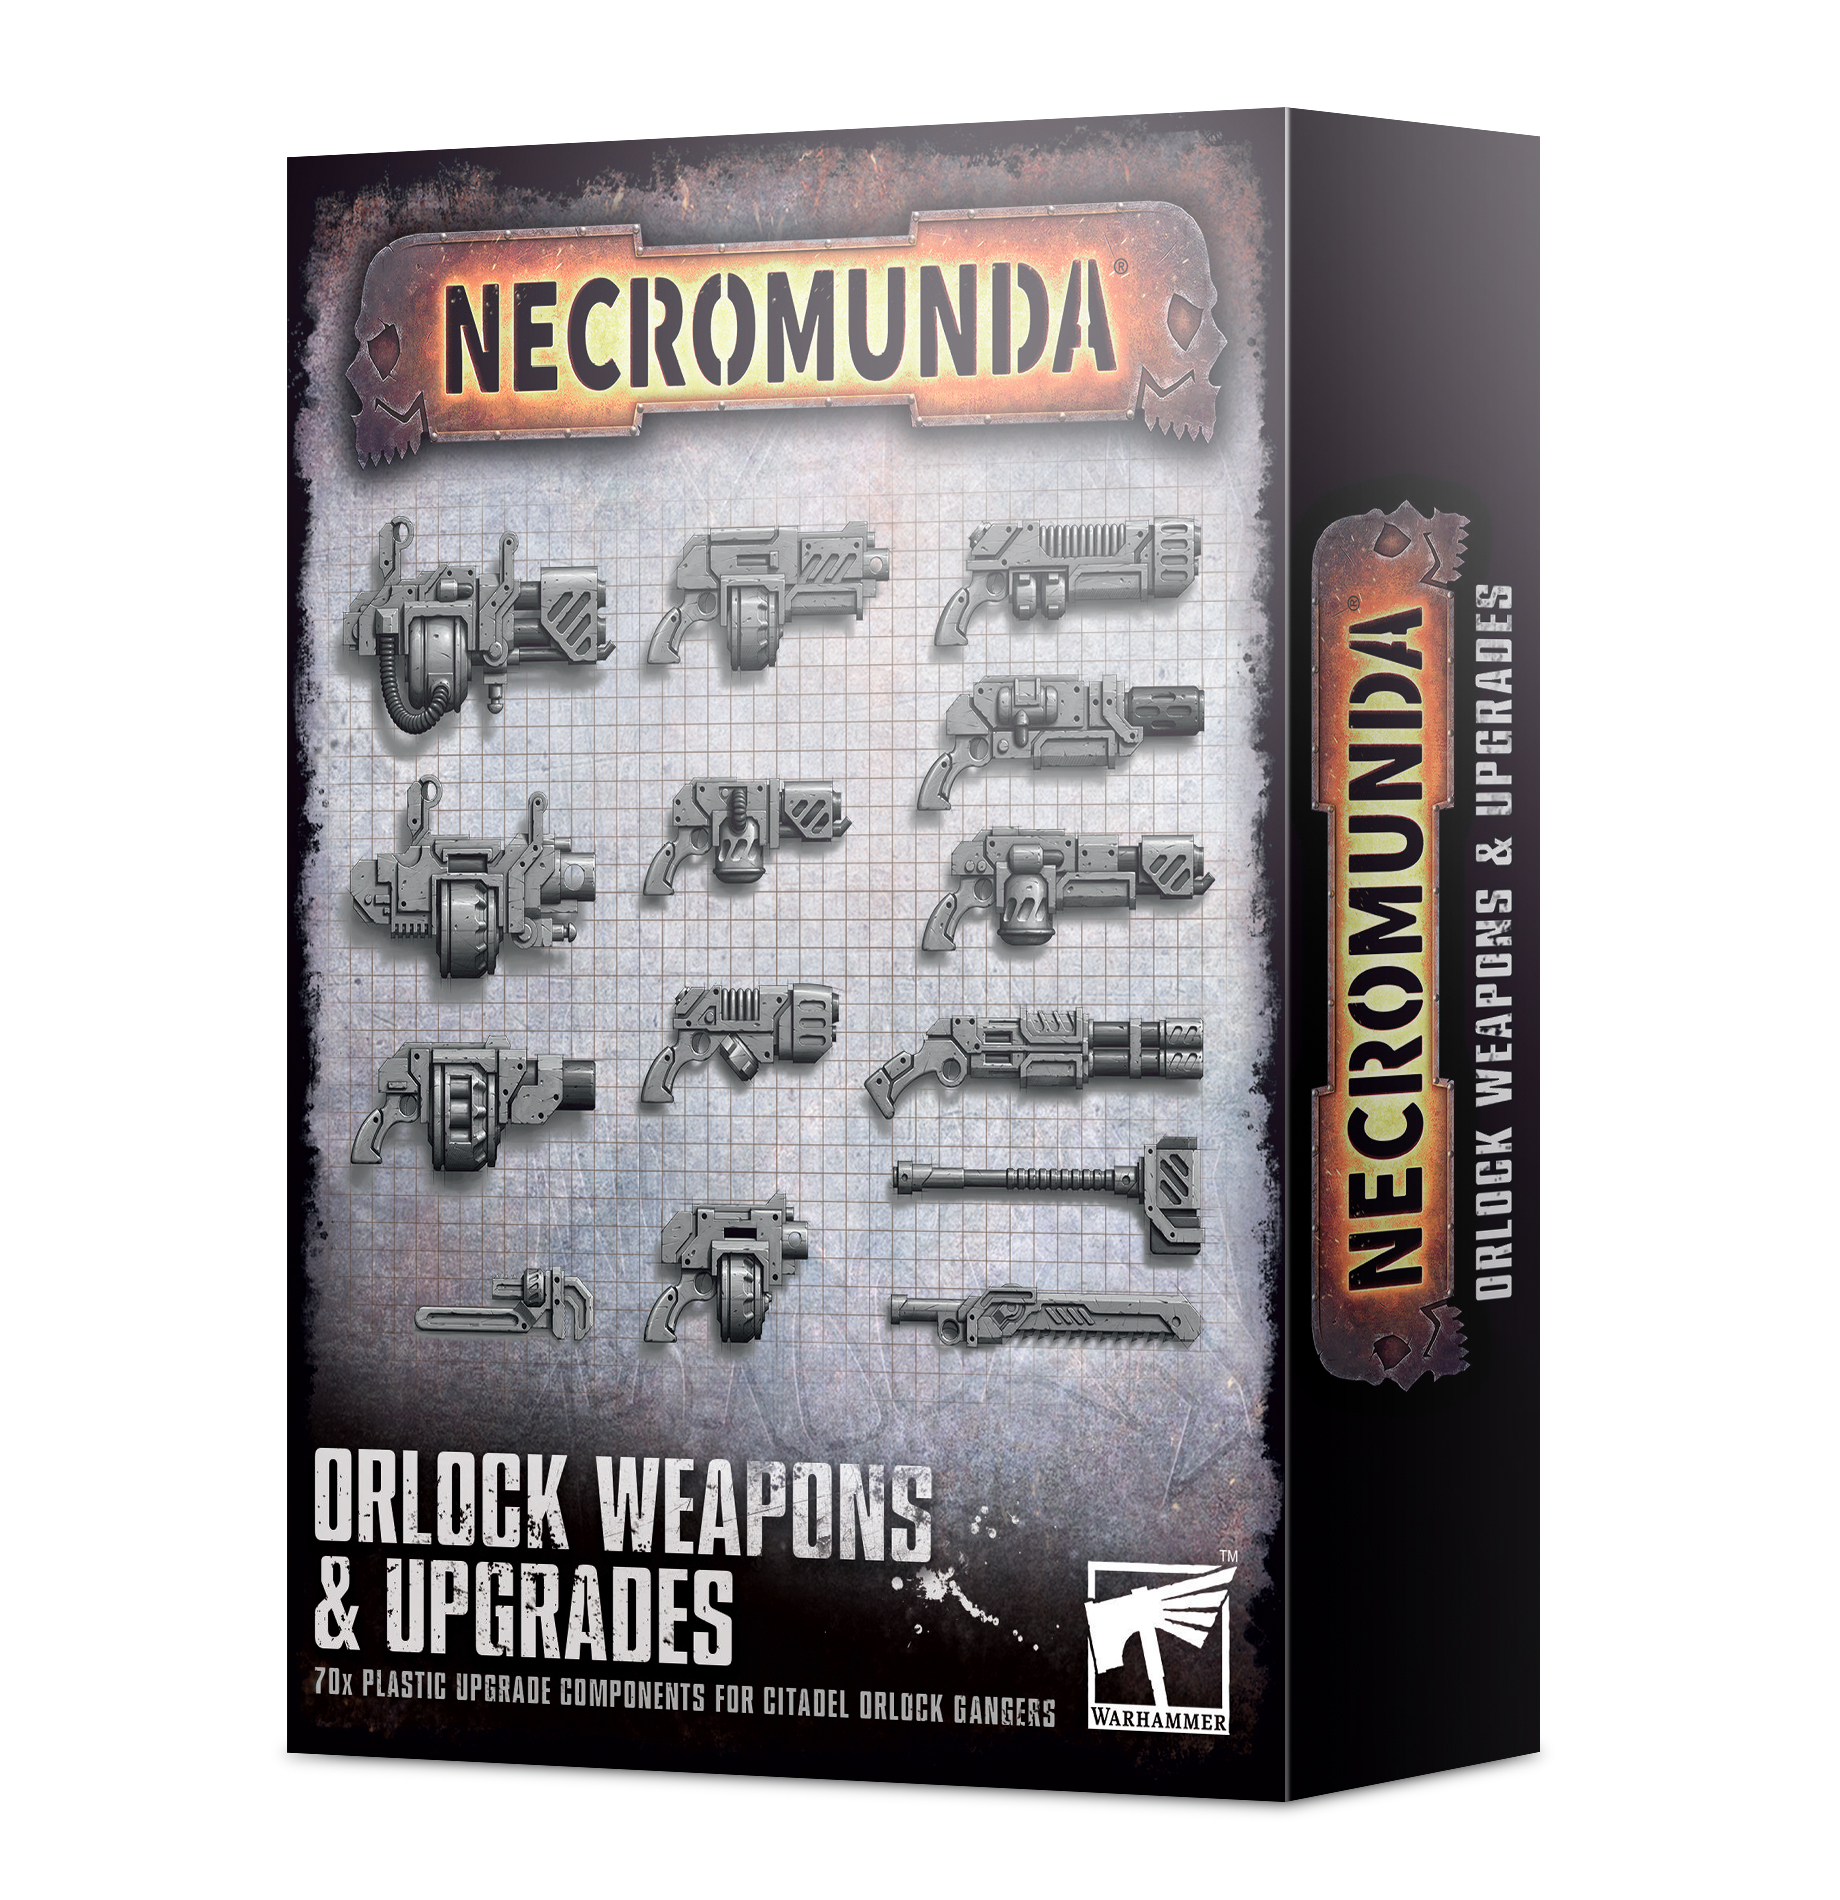 Orlock Weapons & Upgrades - 300-73 - Necromunda